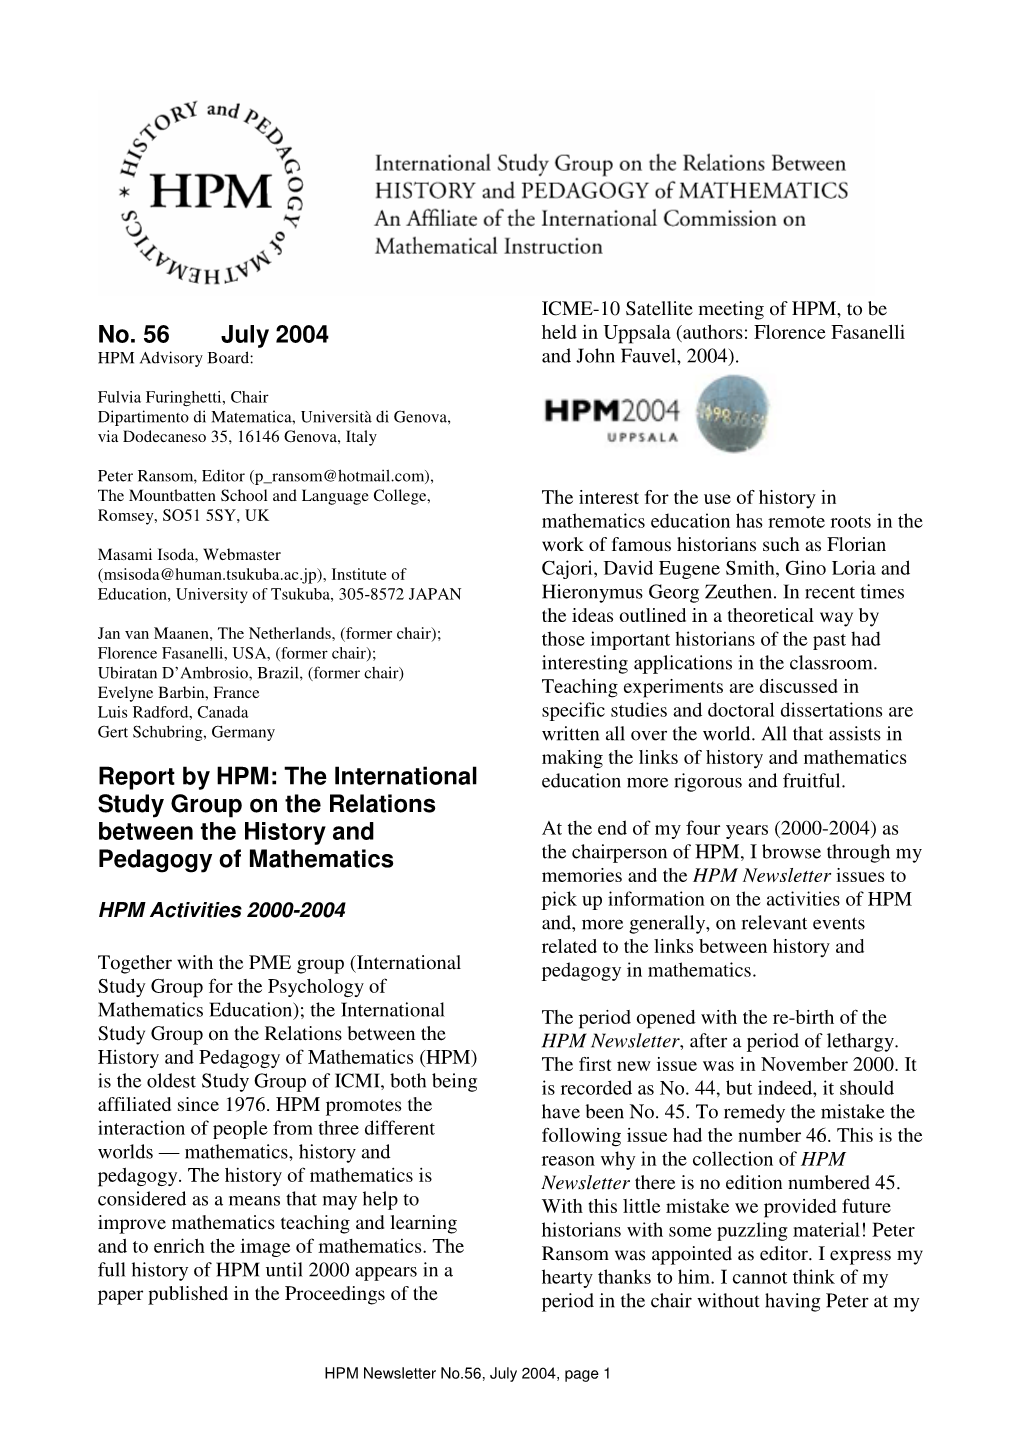 HPM Newsletter 56 July 2004